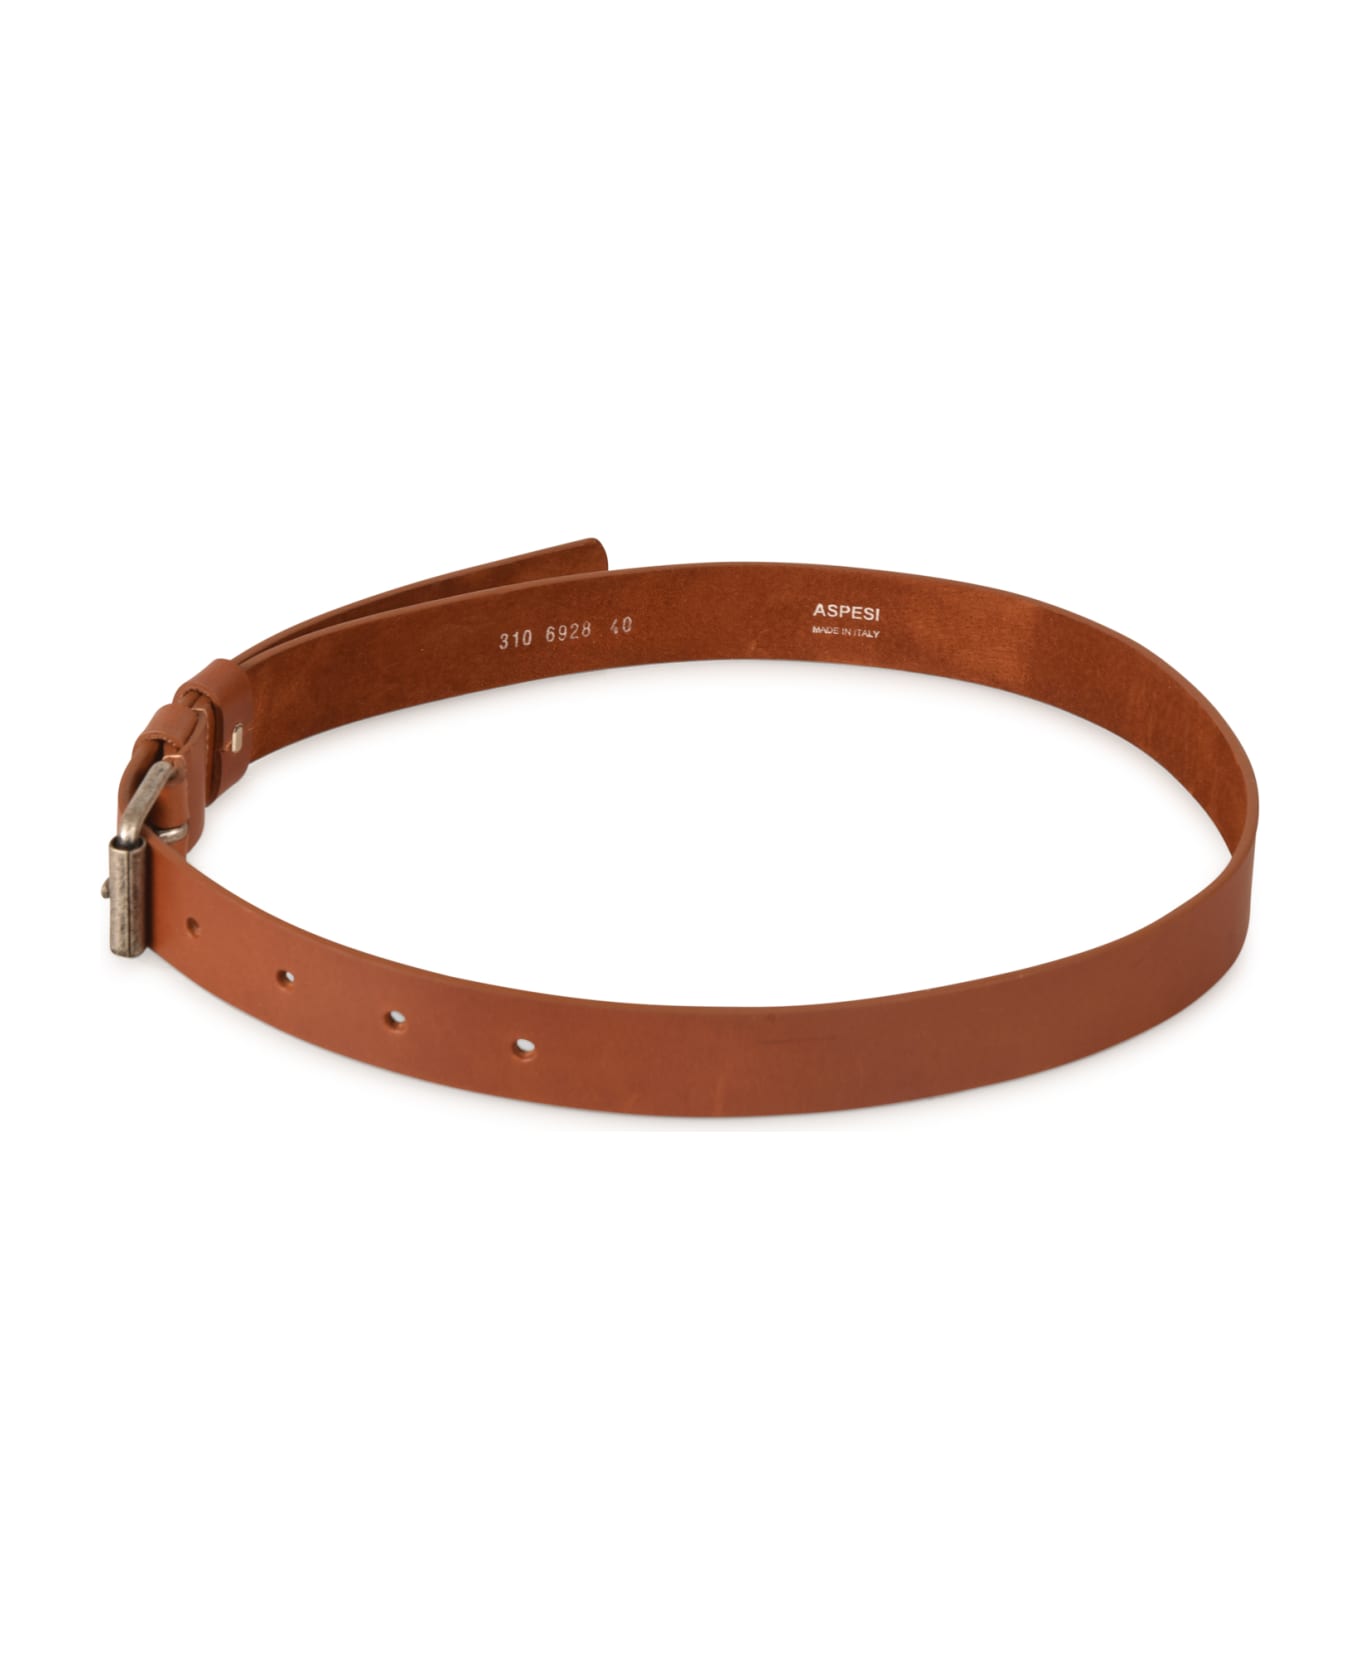 Aspesi Square Buckle Belt - Leather